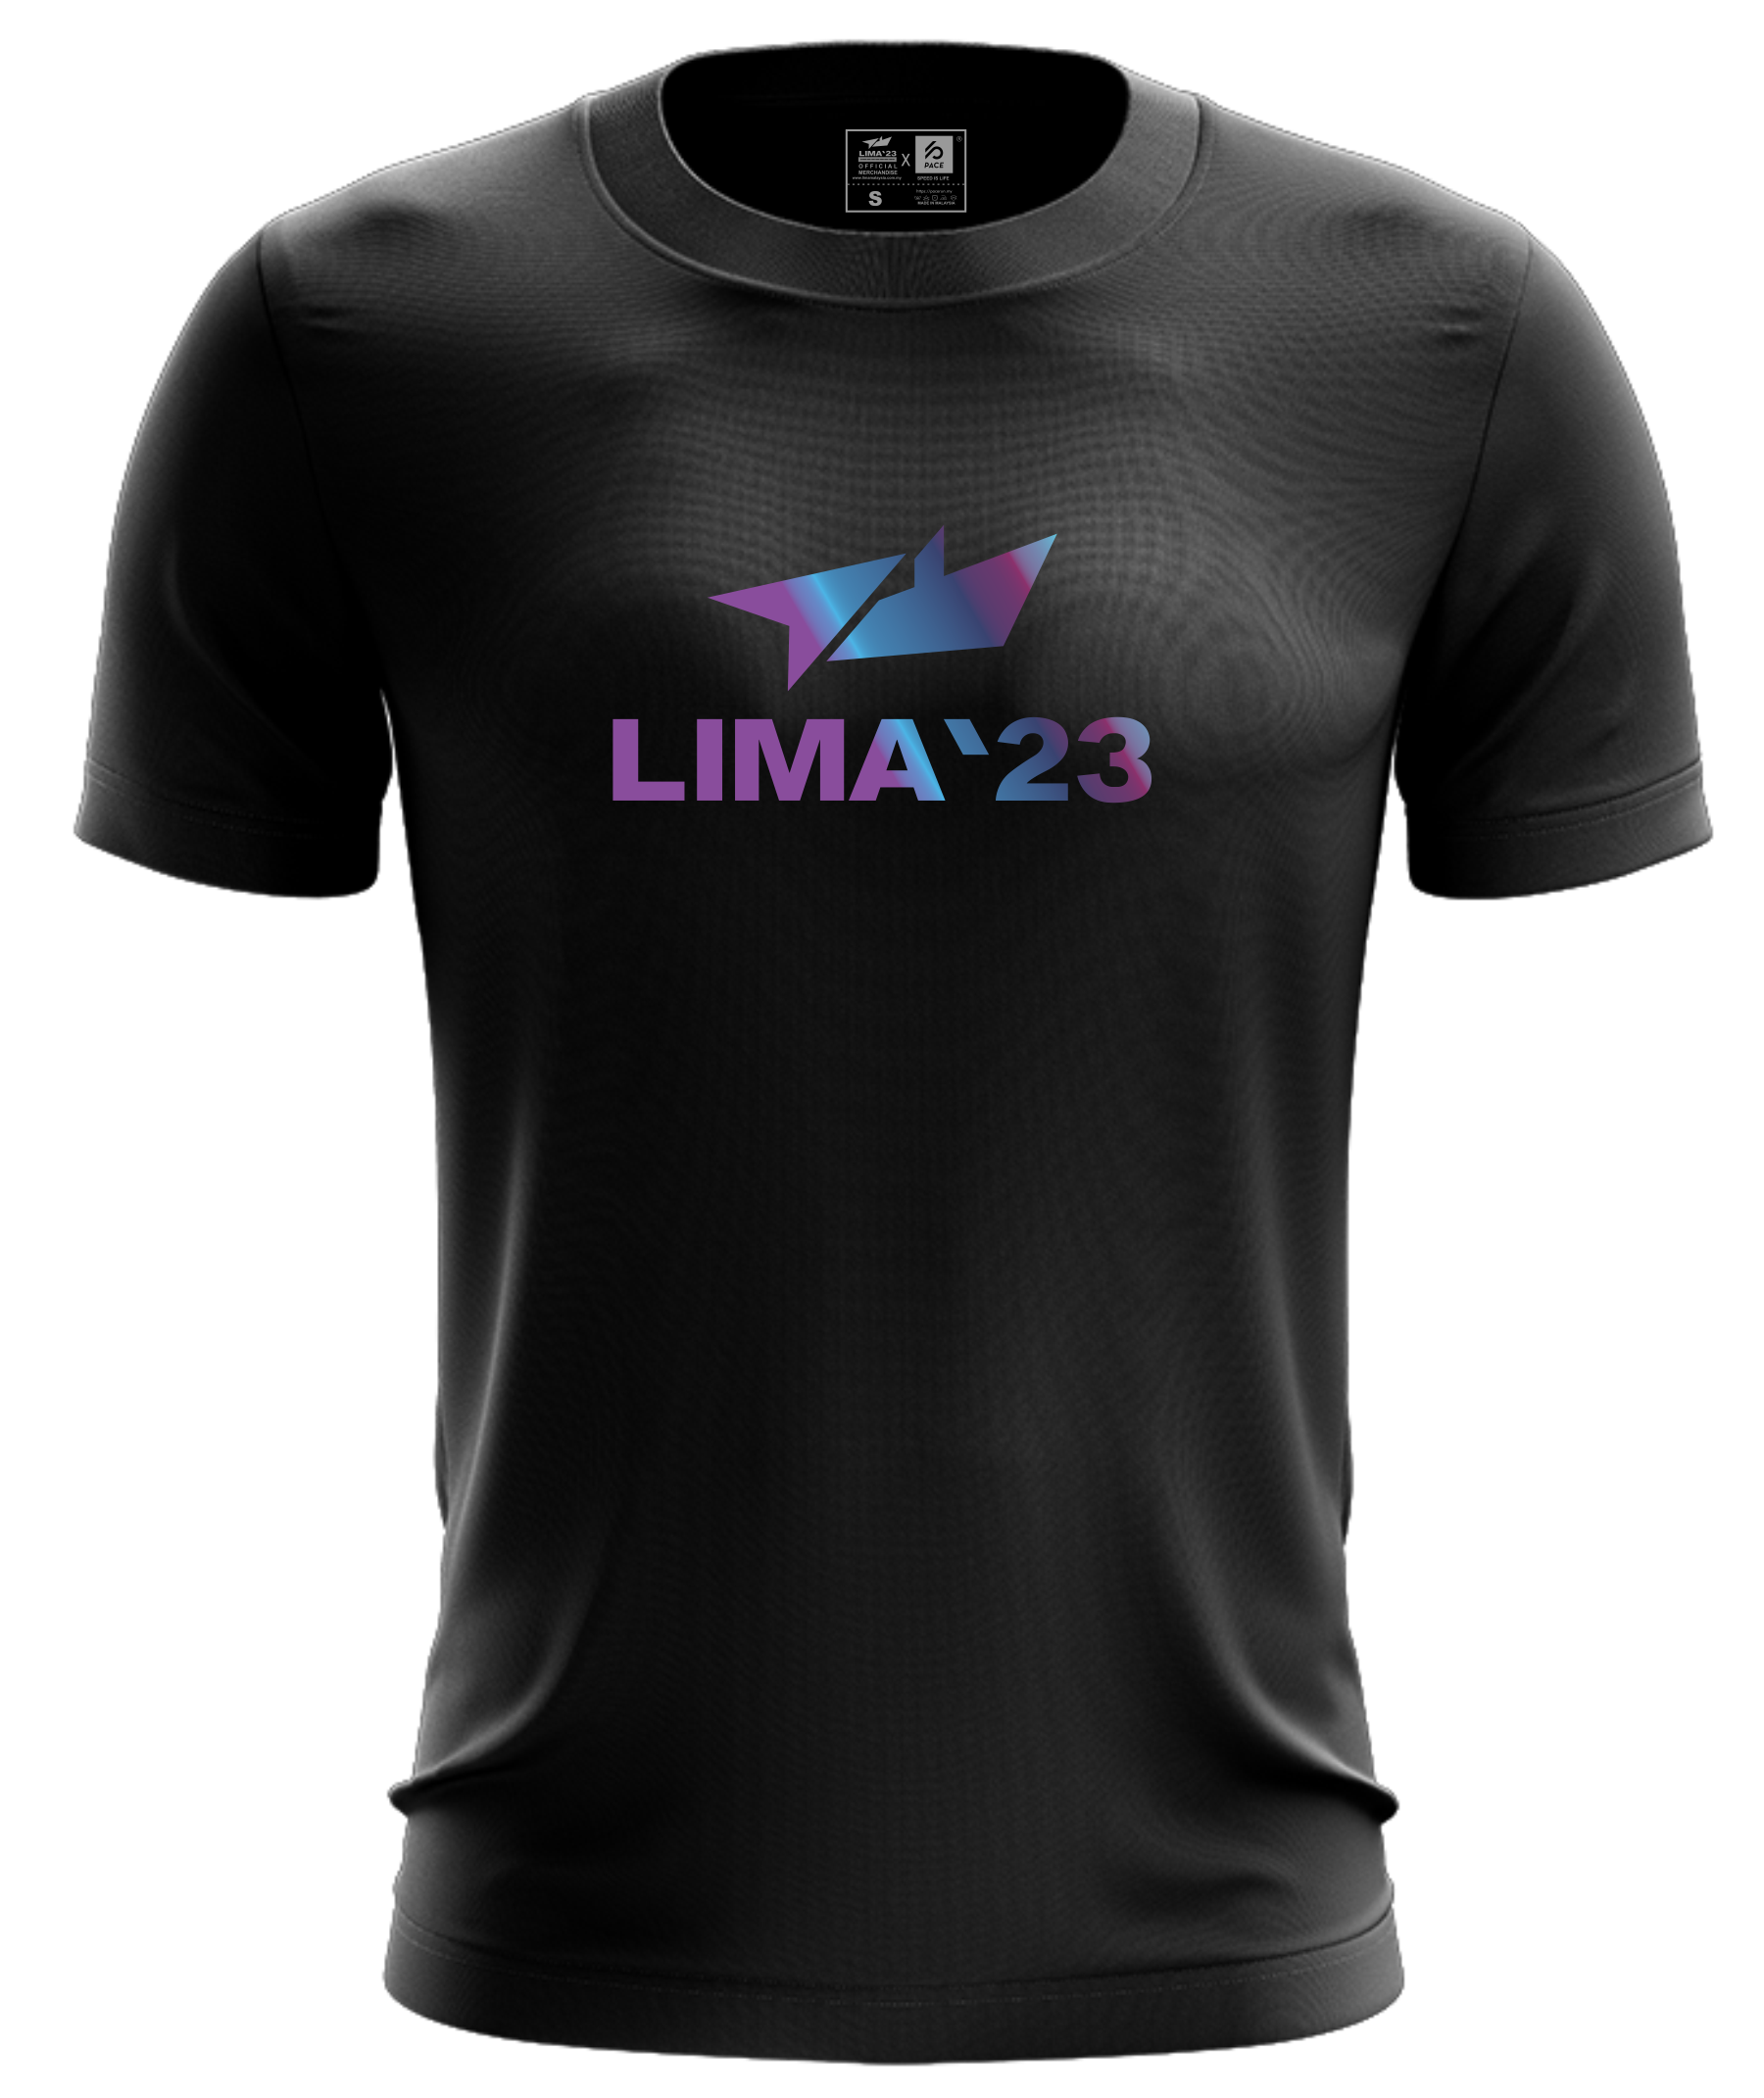 LIMA23 Rainbow Reflective Tee Shirt Black, White, Navy & Tiffanny Blue